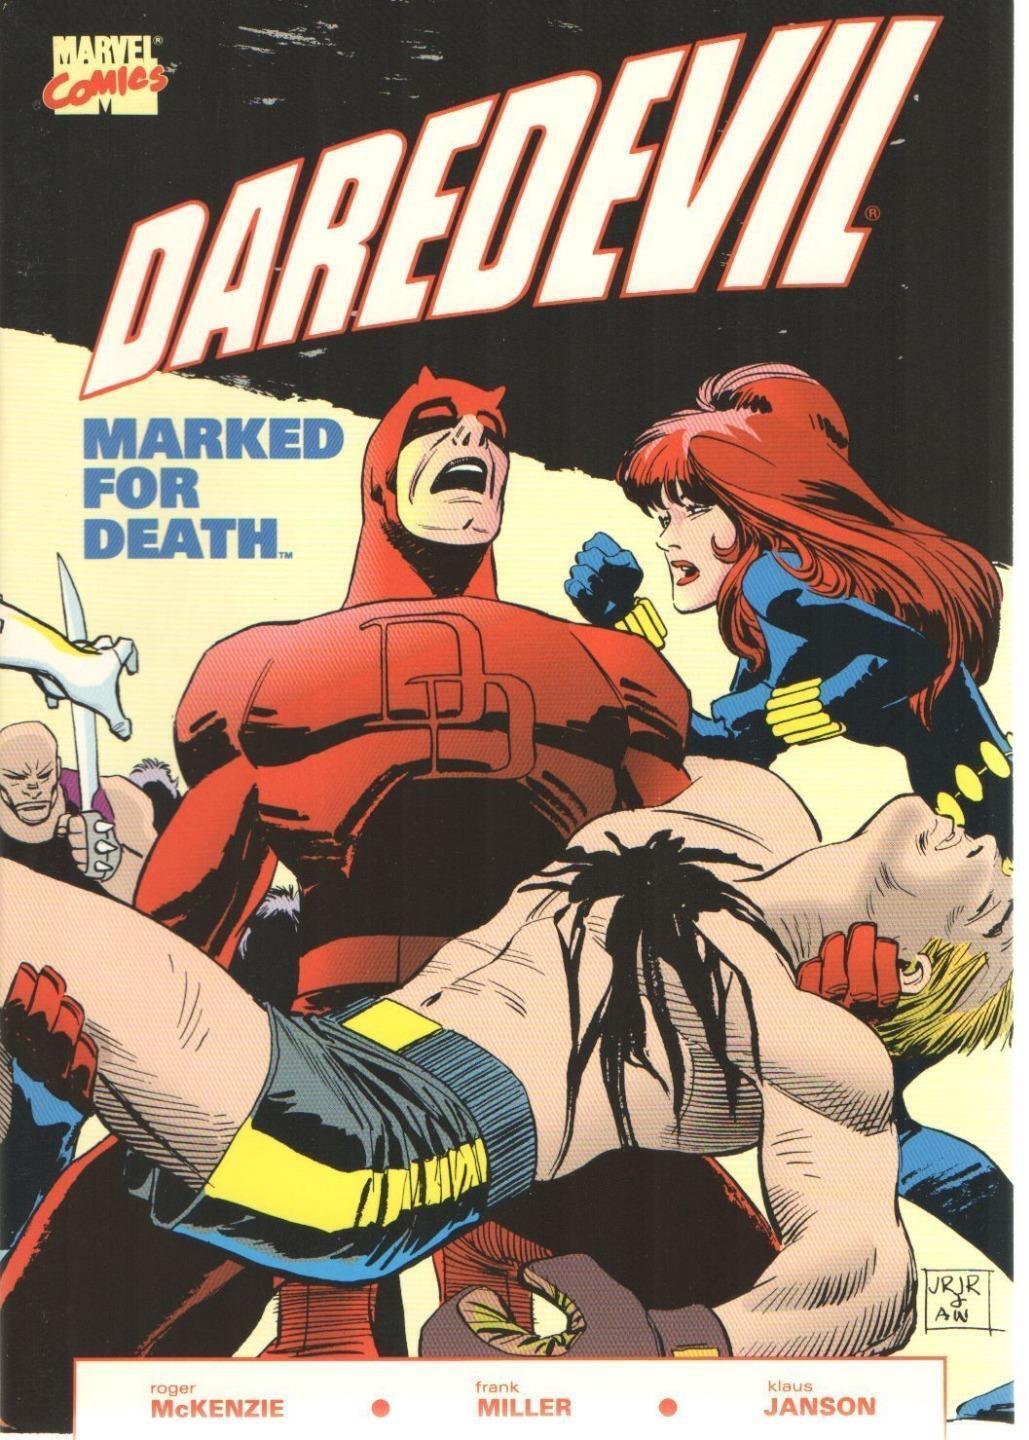 Daredevil Marked For Death TPB, Frank Miller, NM 9.4, 1st Printing, 1990